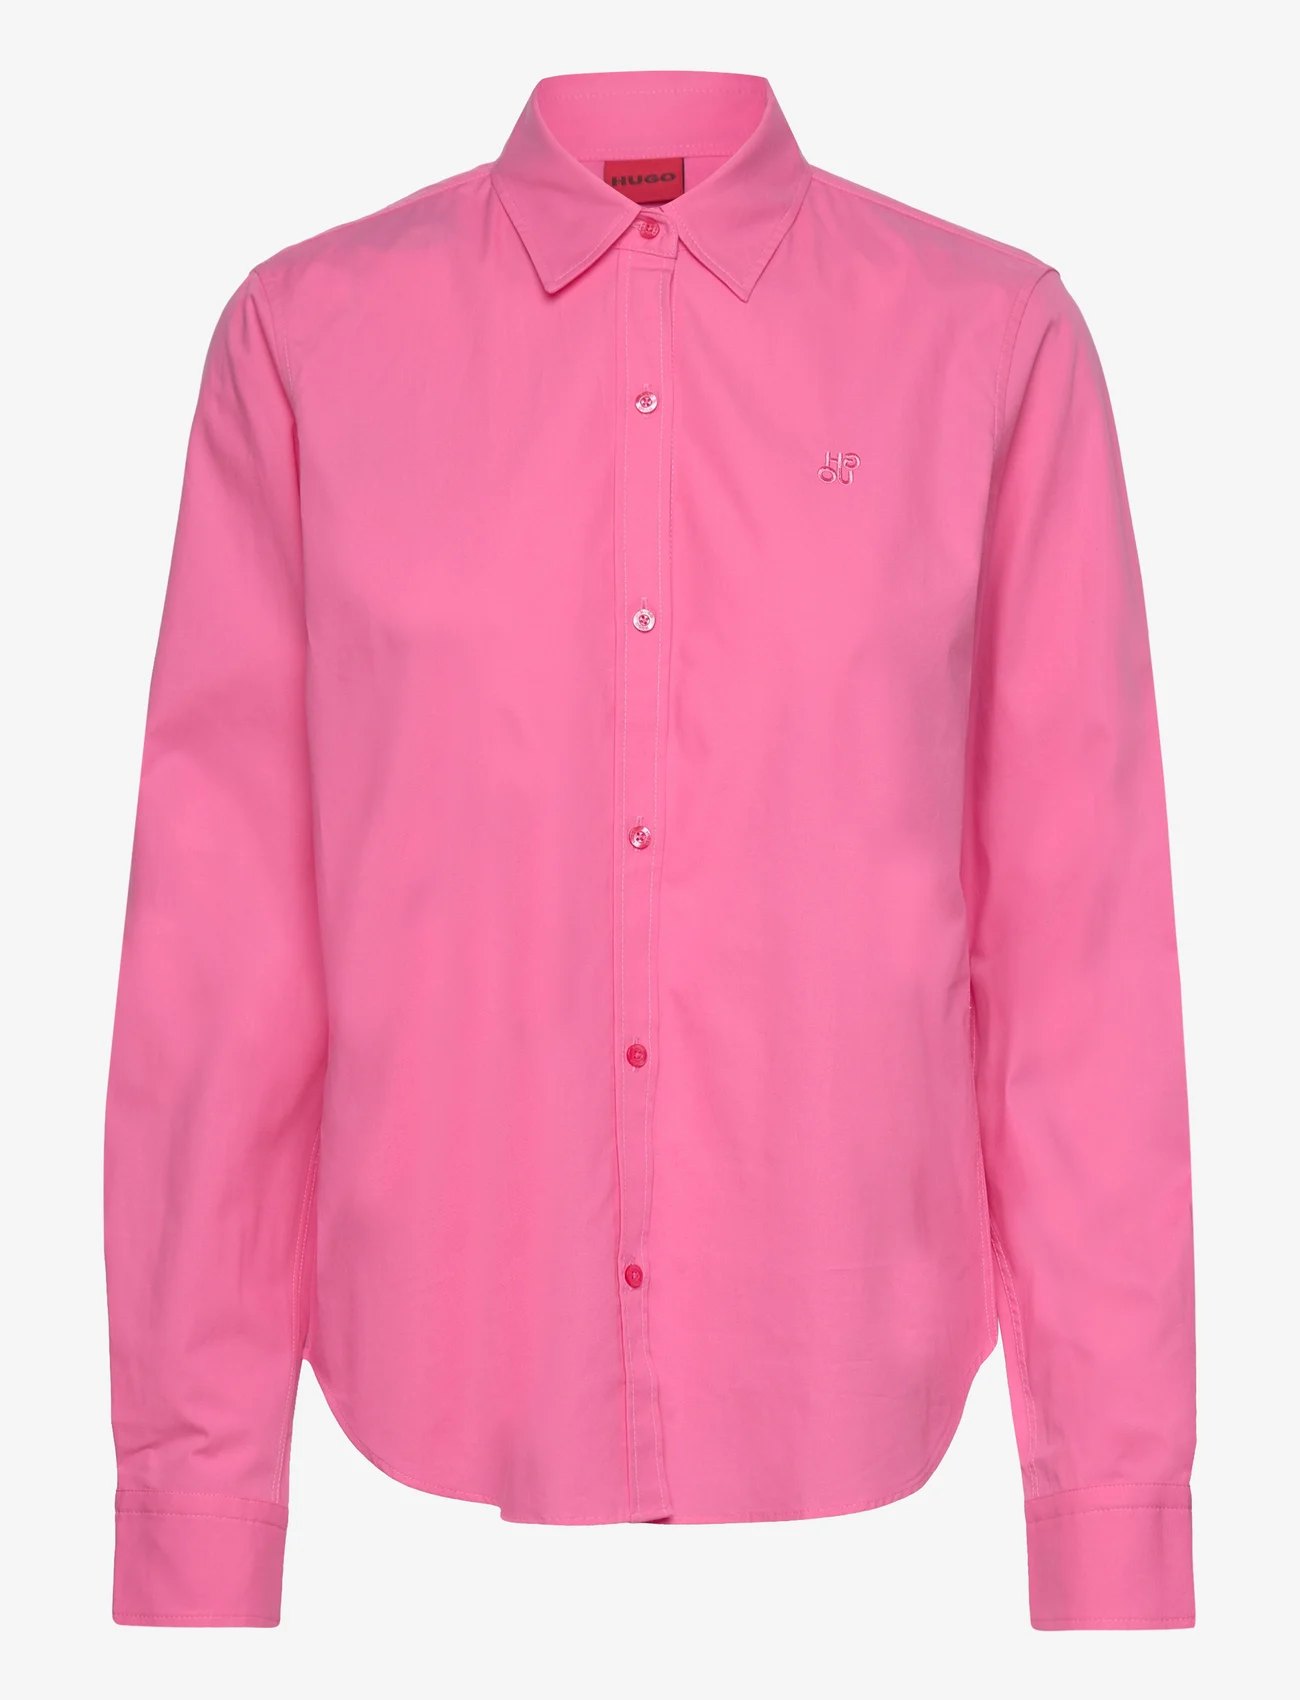 HUGO - The Essential Shirt - medium pink - 0